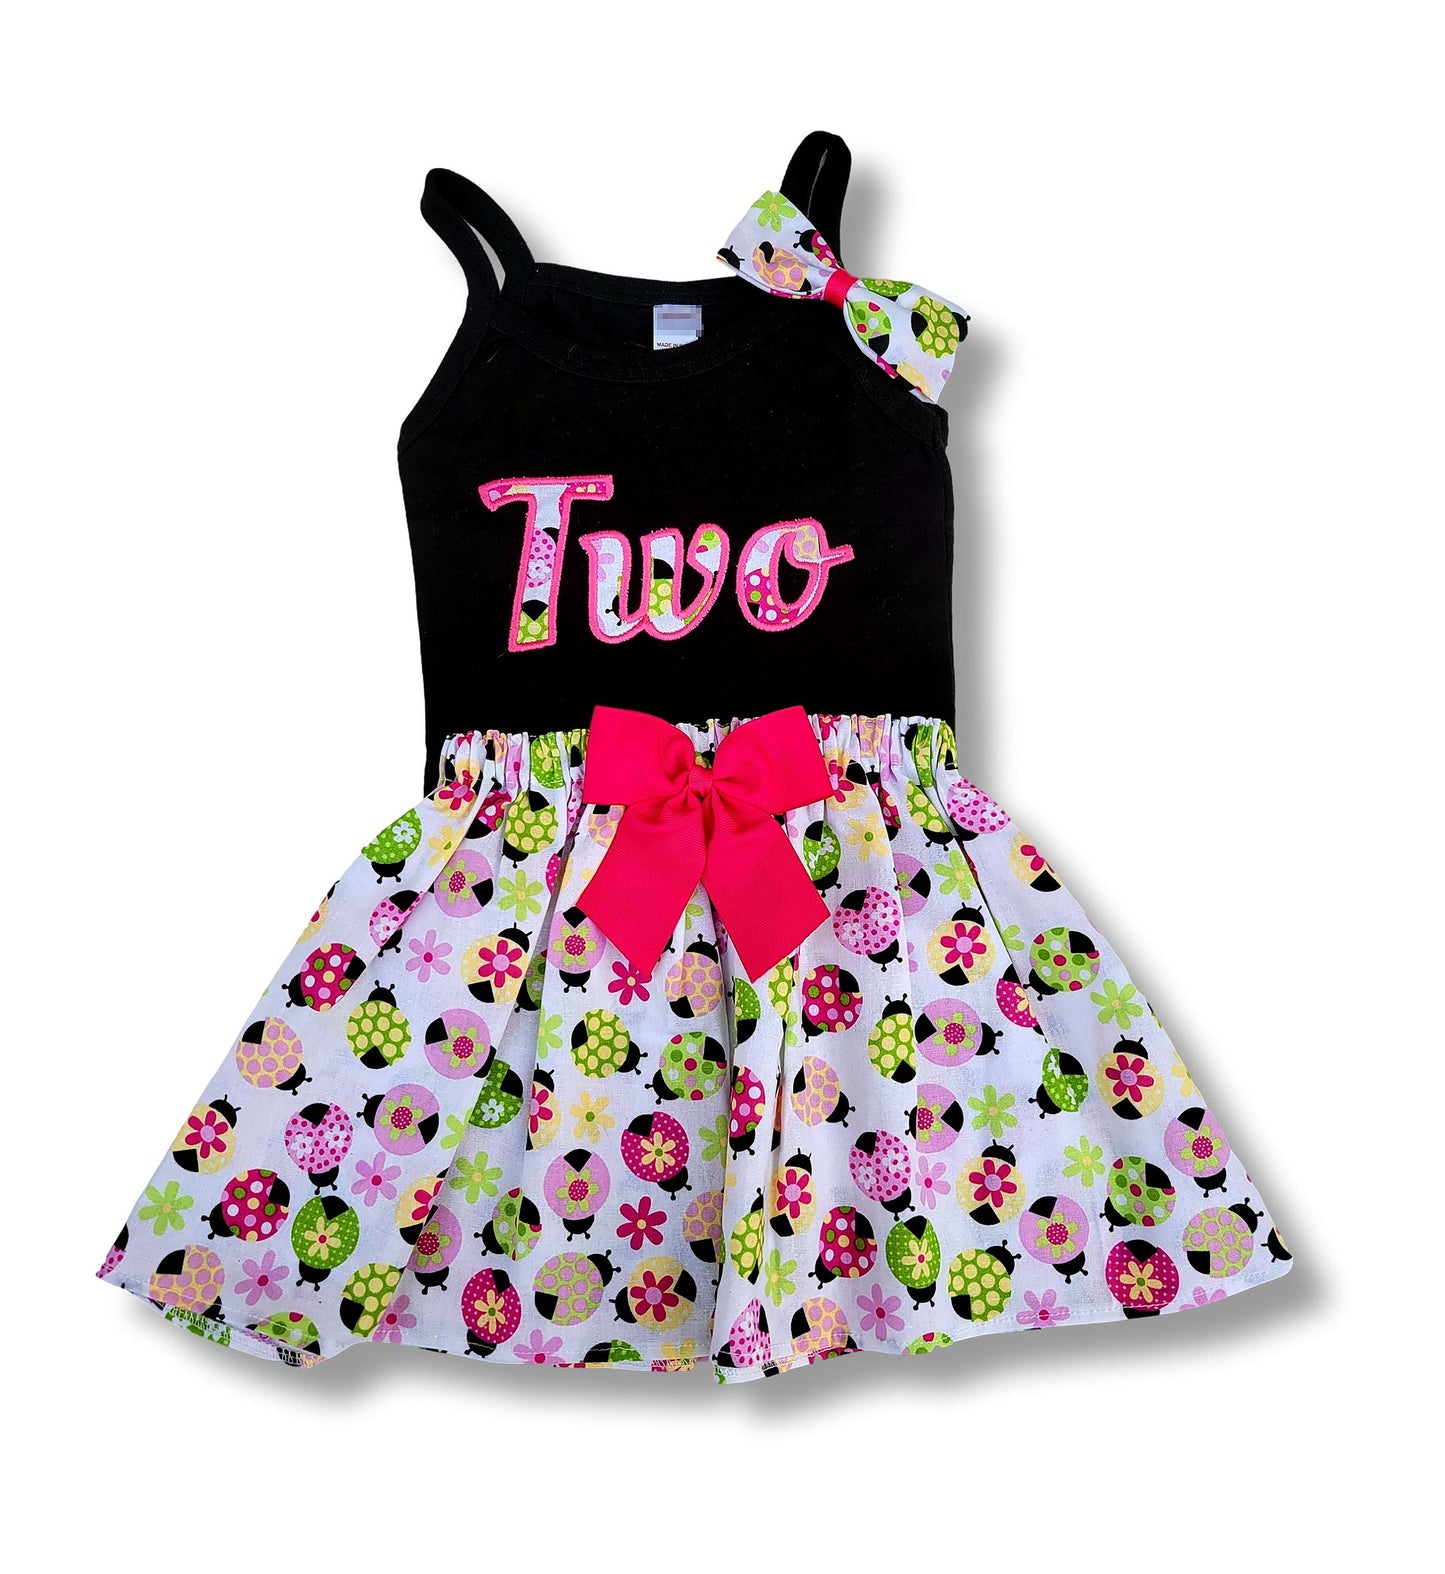 Ladybug second birthday outfit, Toddler ladybug skirt, Girls first birthday skirt shirt outfit, Ladybug outfit